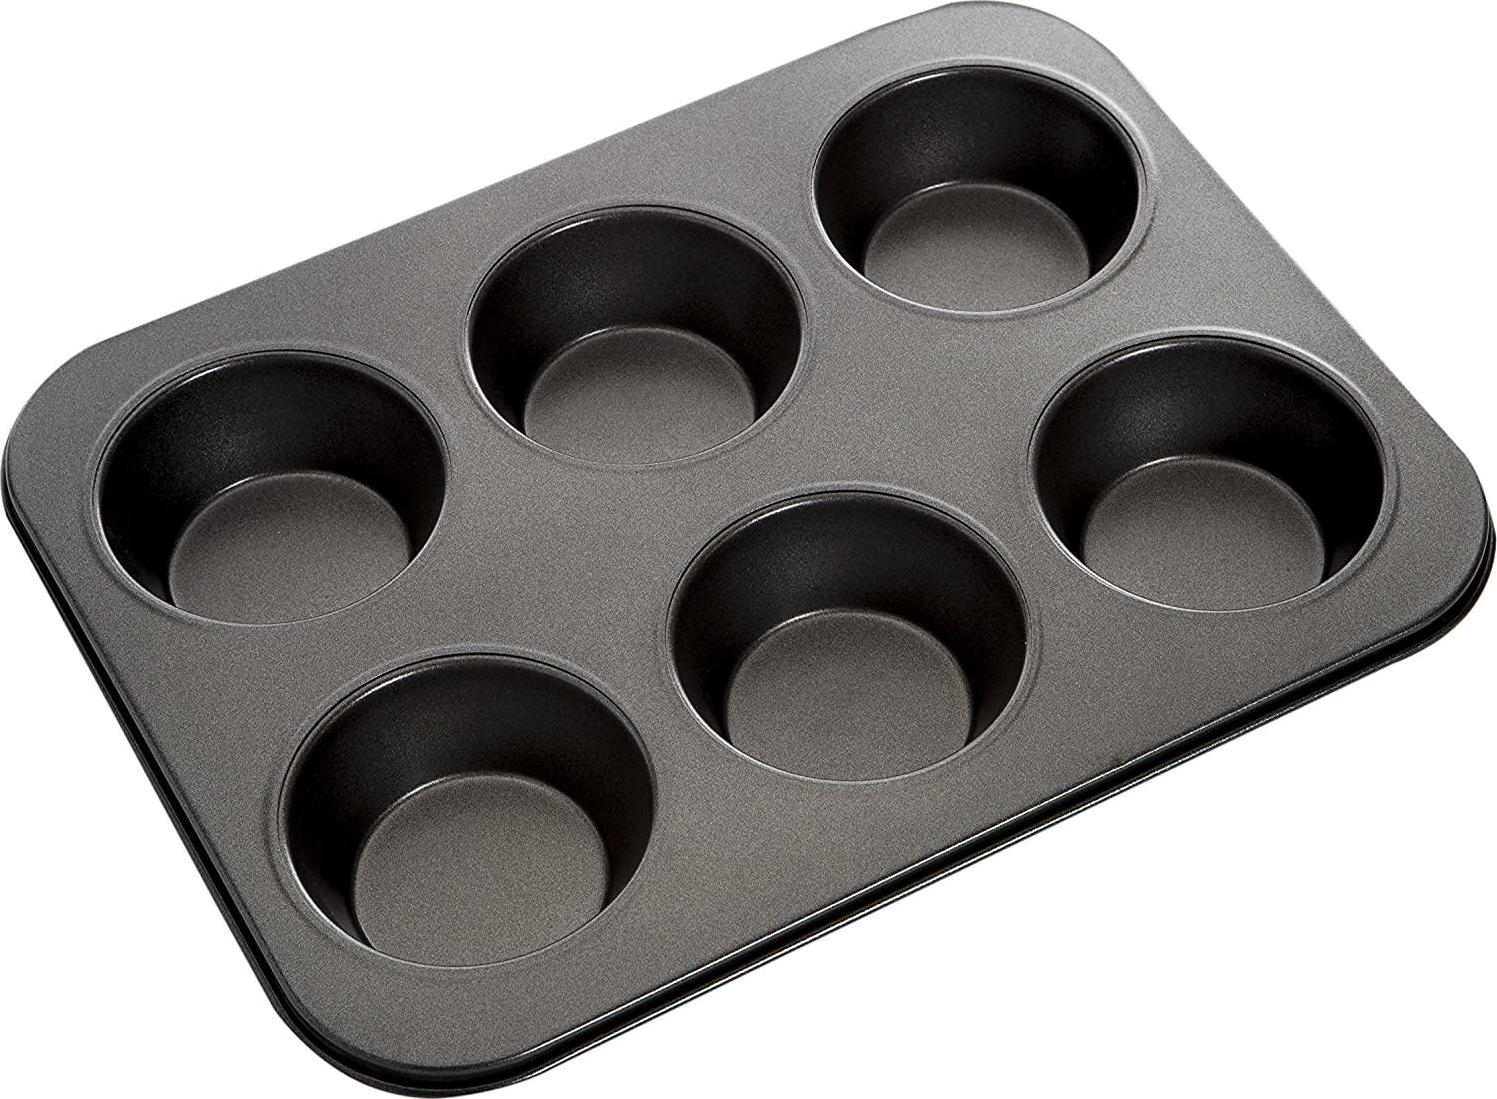 MasterPro, MASTERPRO MPHB42 Muffin Pie Pan, Carbon Steel/Black